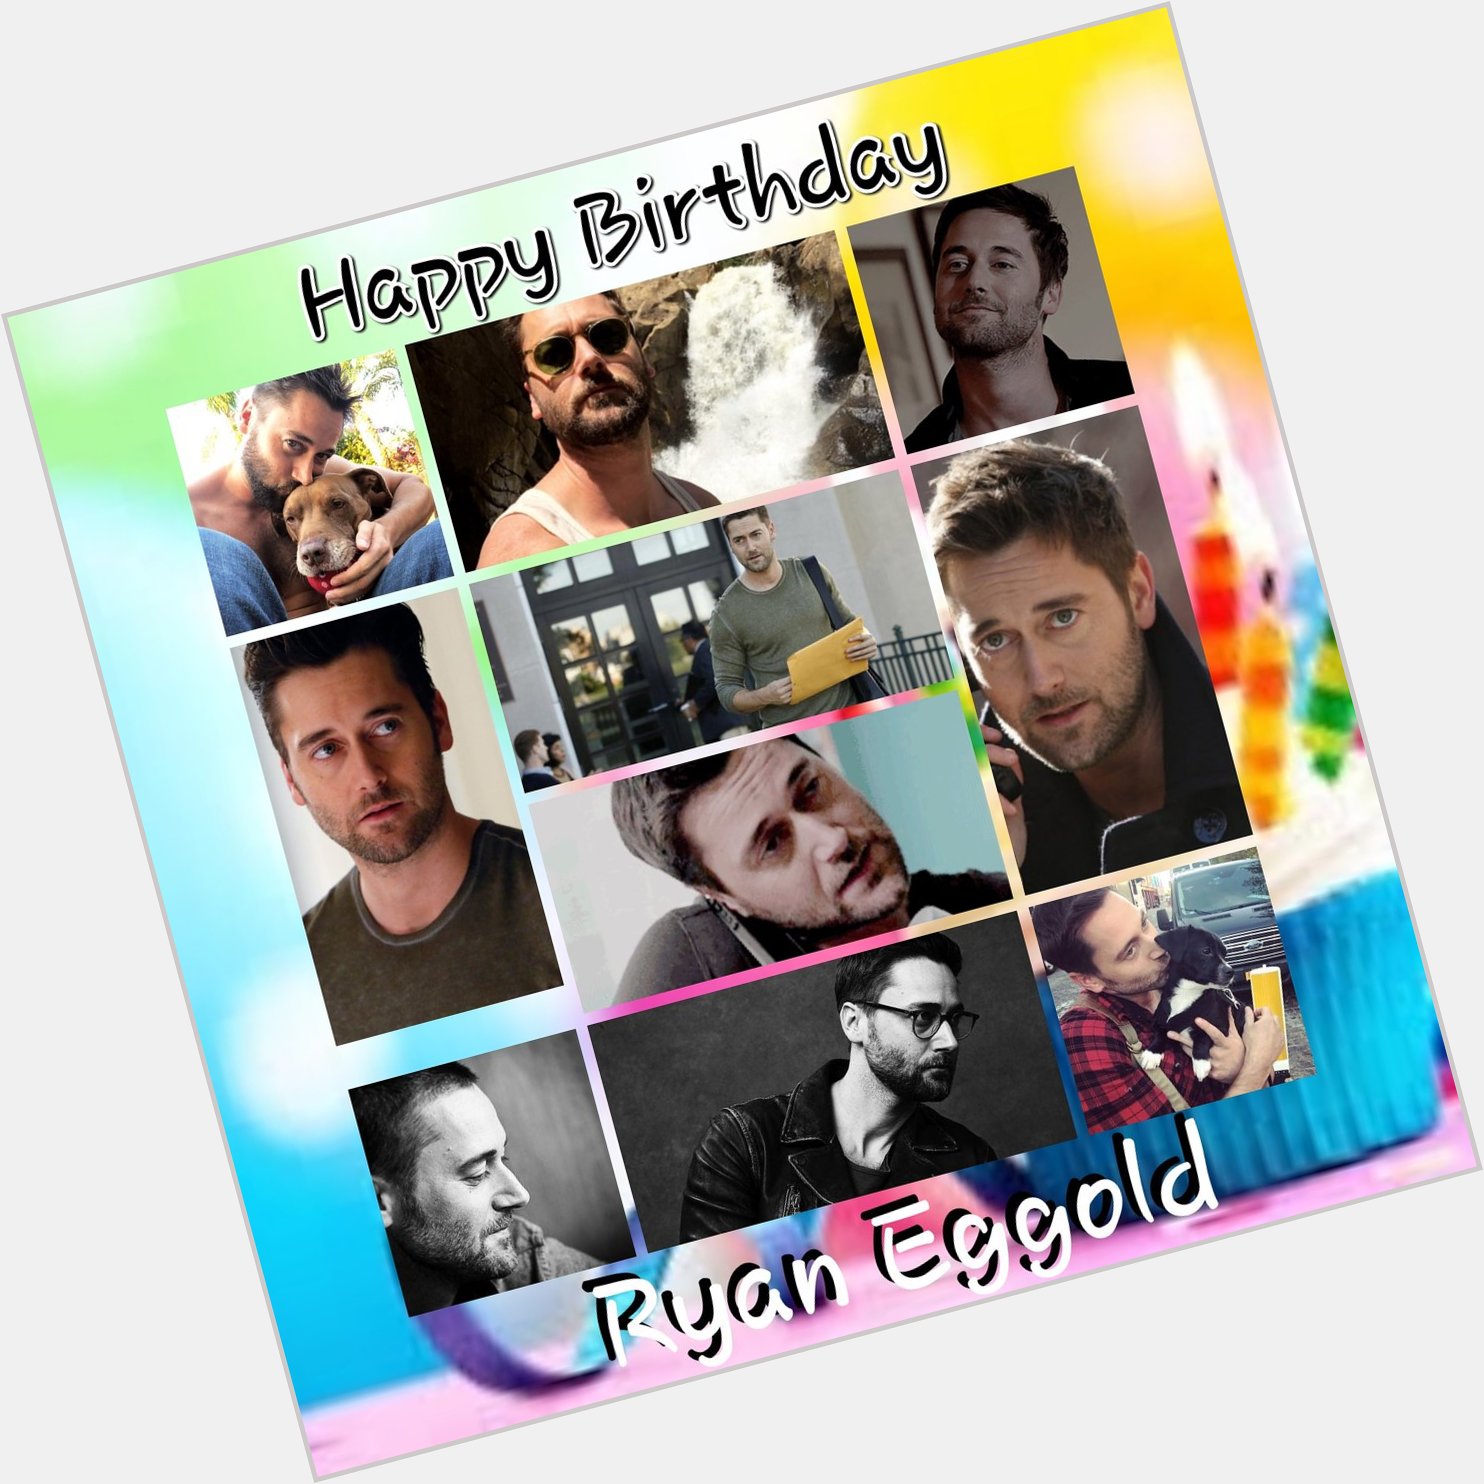 Happy birthday Ryan Eggold     